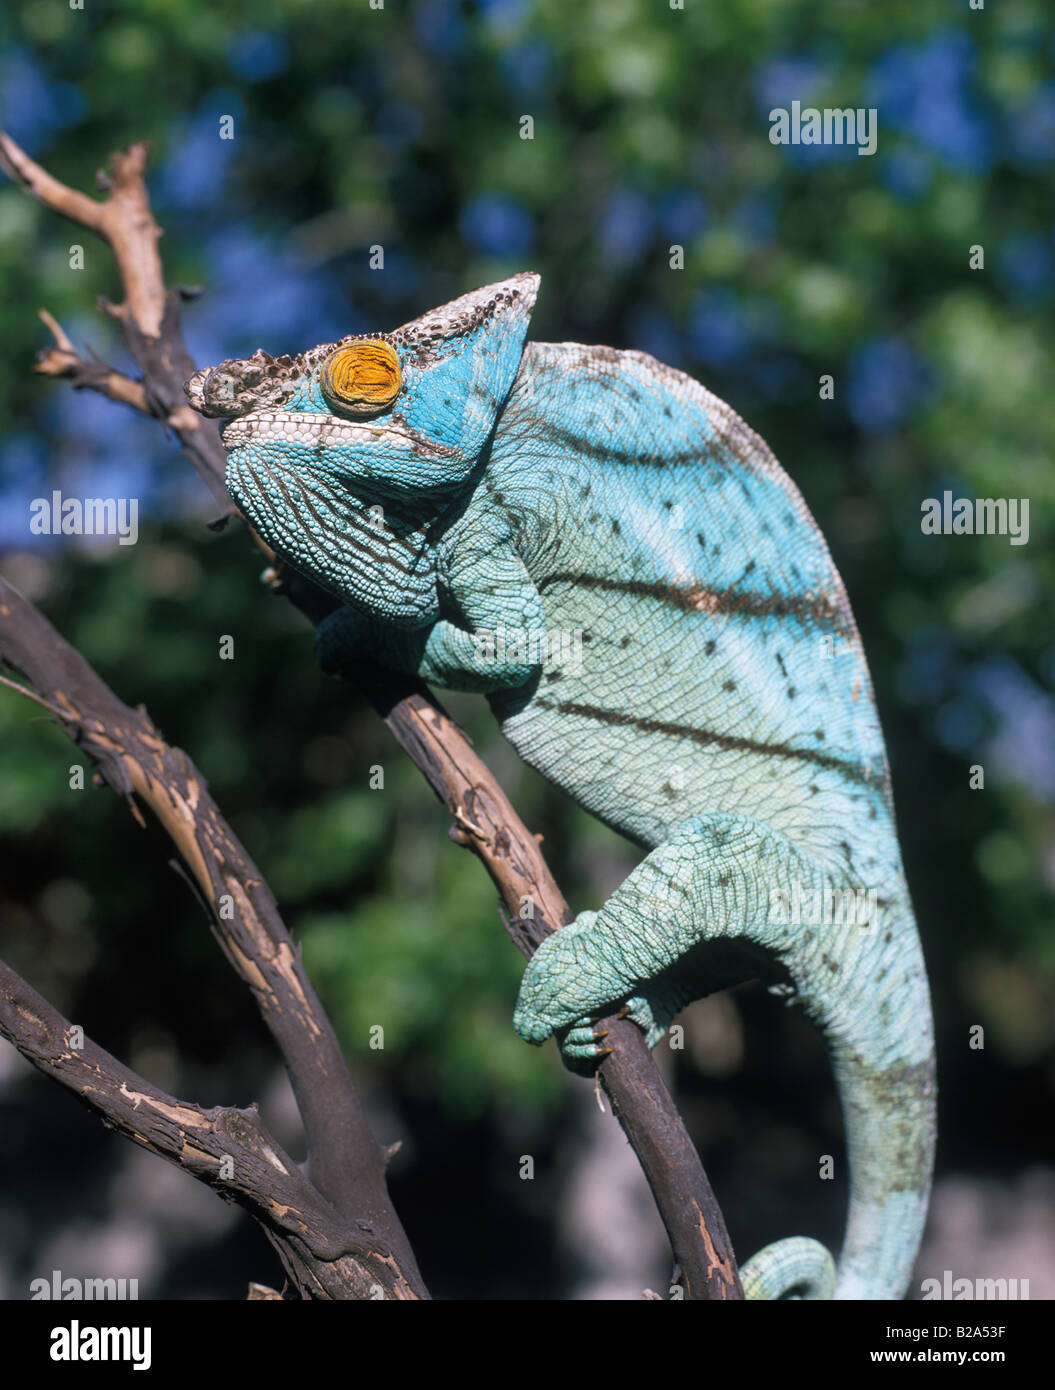 Camaleonte, Panther chameleon, chameleon sul ramo, Foto Stock